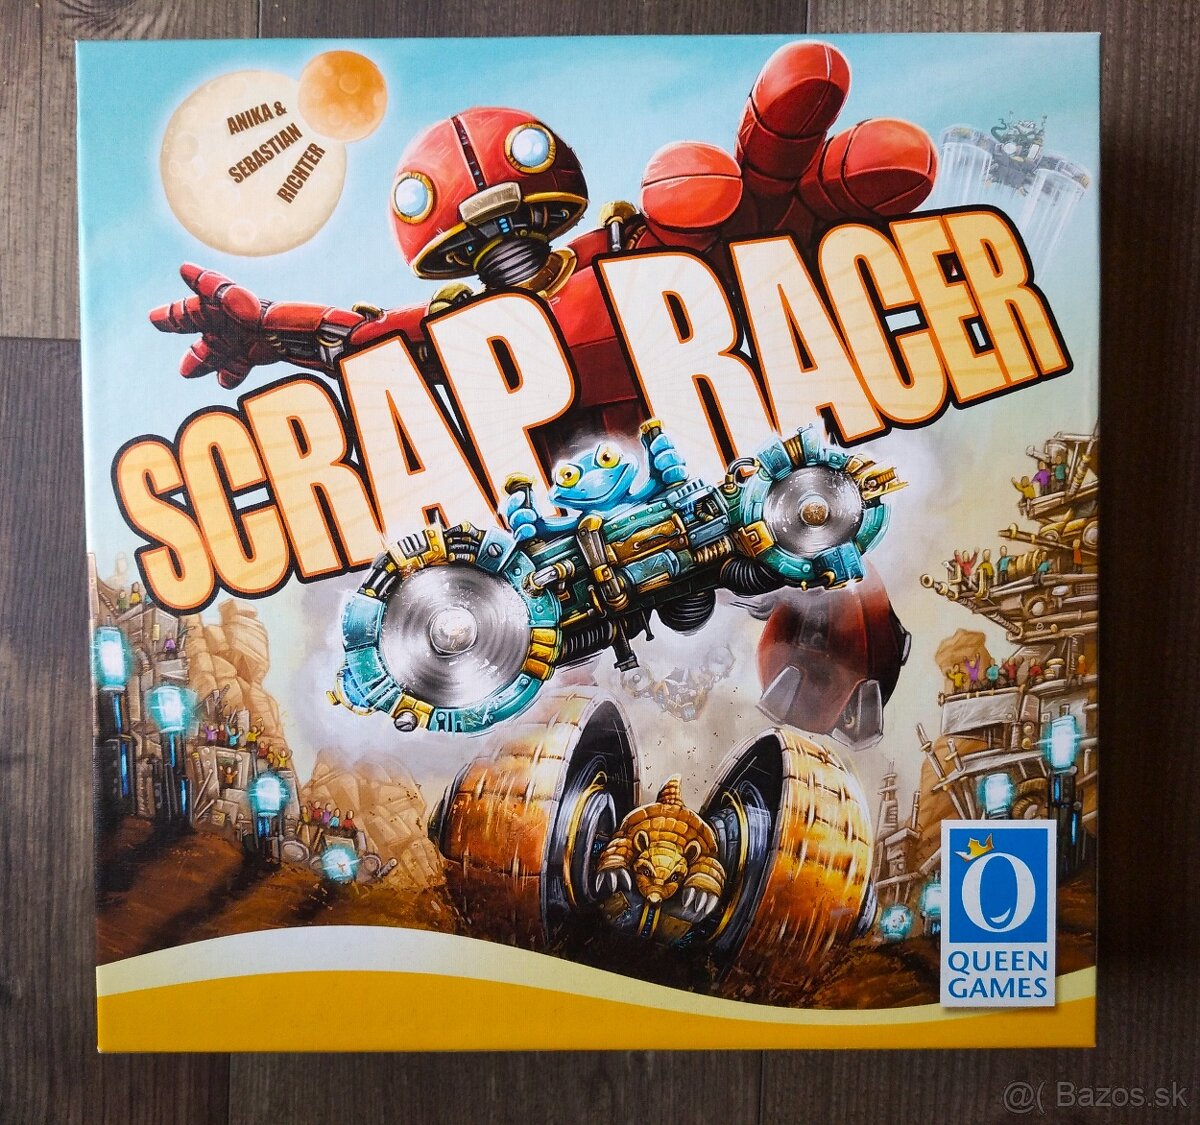 Spoločenská hra Scrap racer